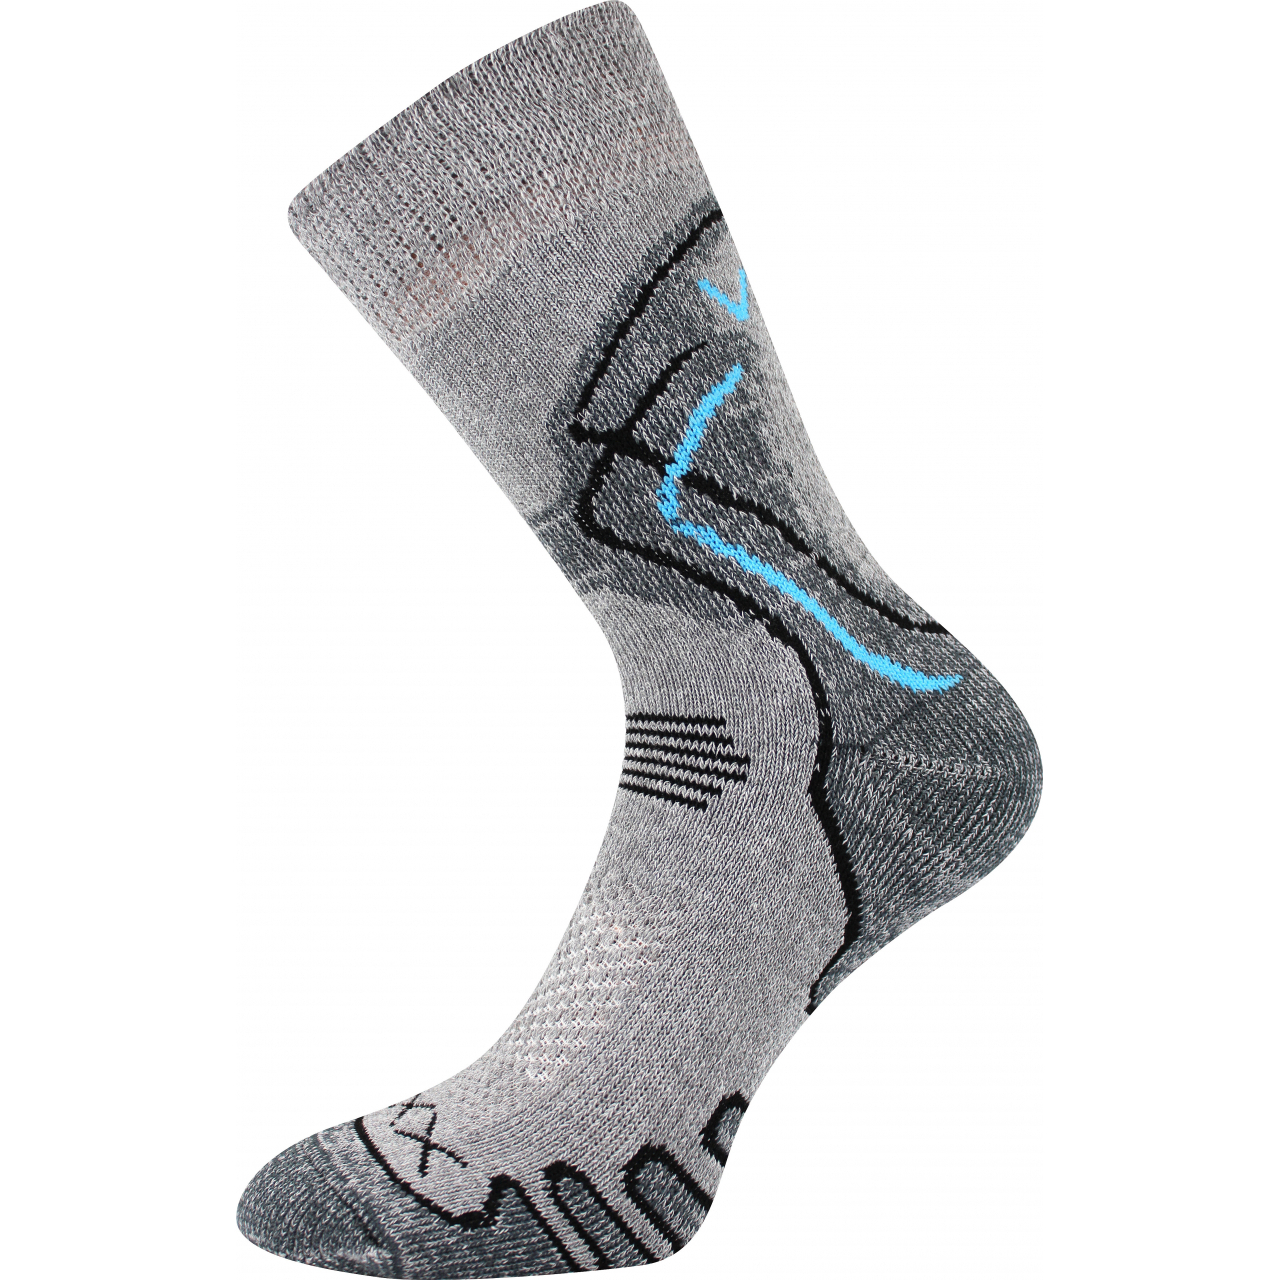 Ponožky trekingové unisex Voxx Limit III - šedé, 43-46